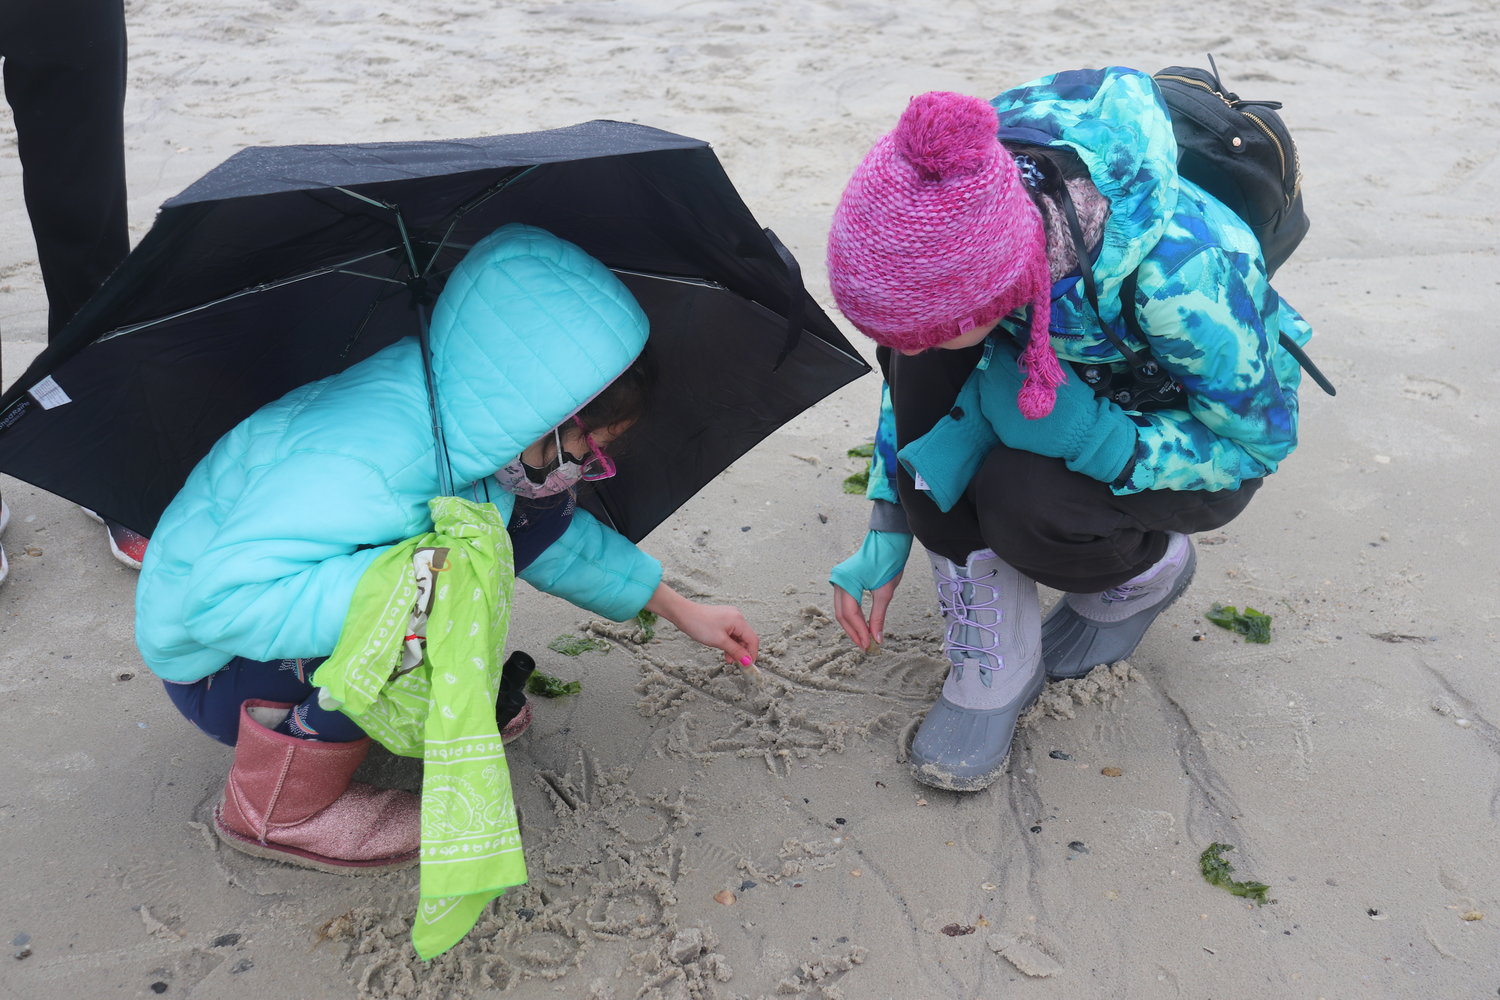 Maya Ostrow, 8, plays Tic-Tac-Toe in the sand with Sofia Ricci, 13.